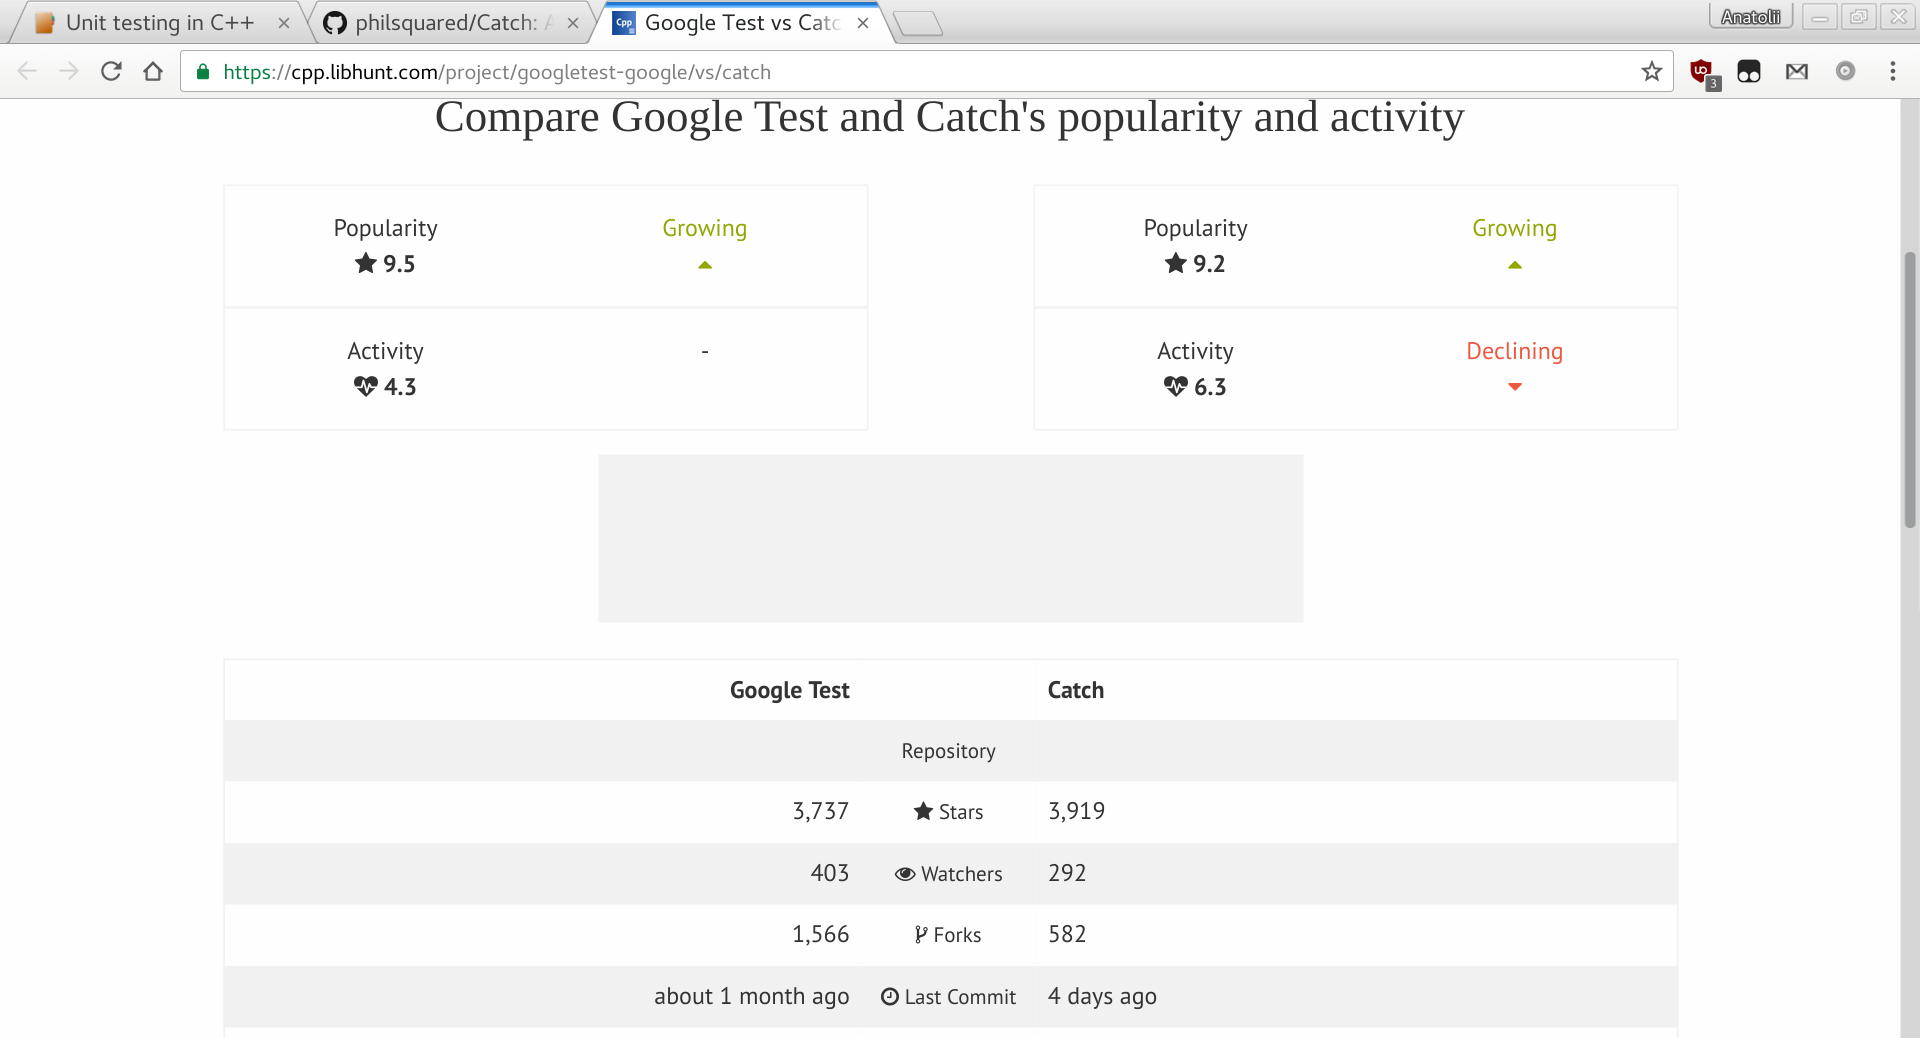 Google Test vs Catch